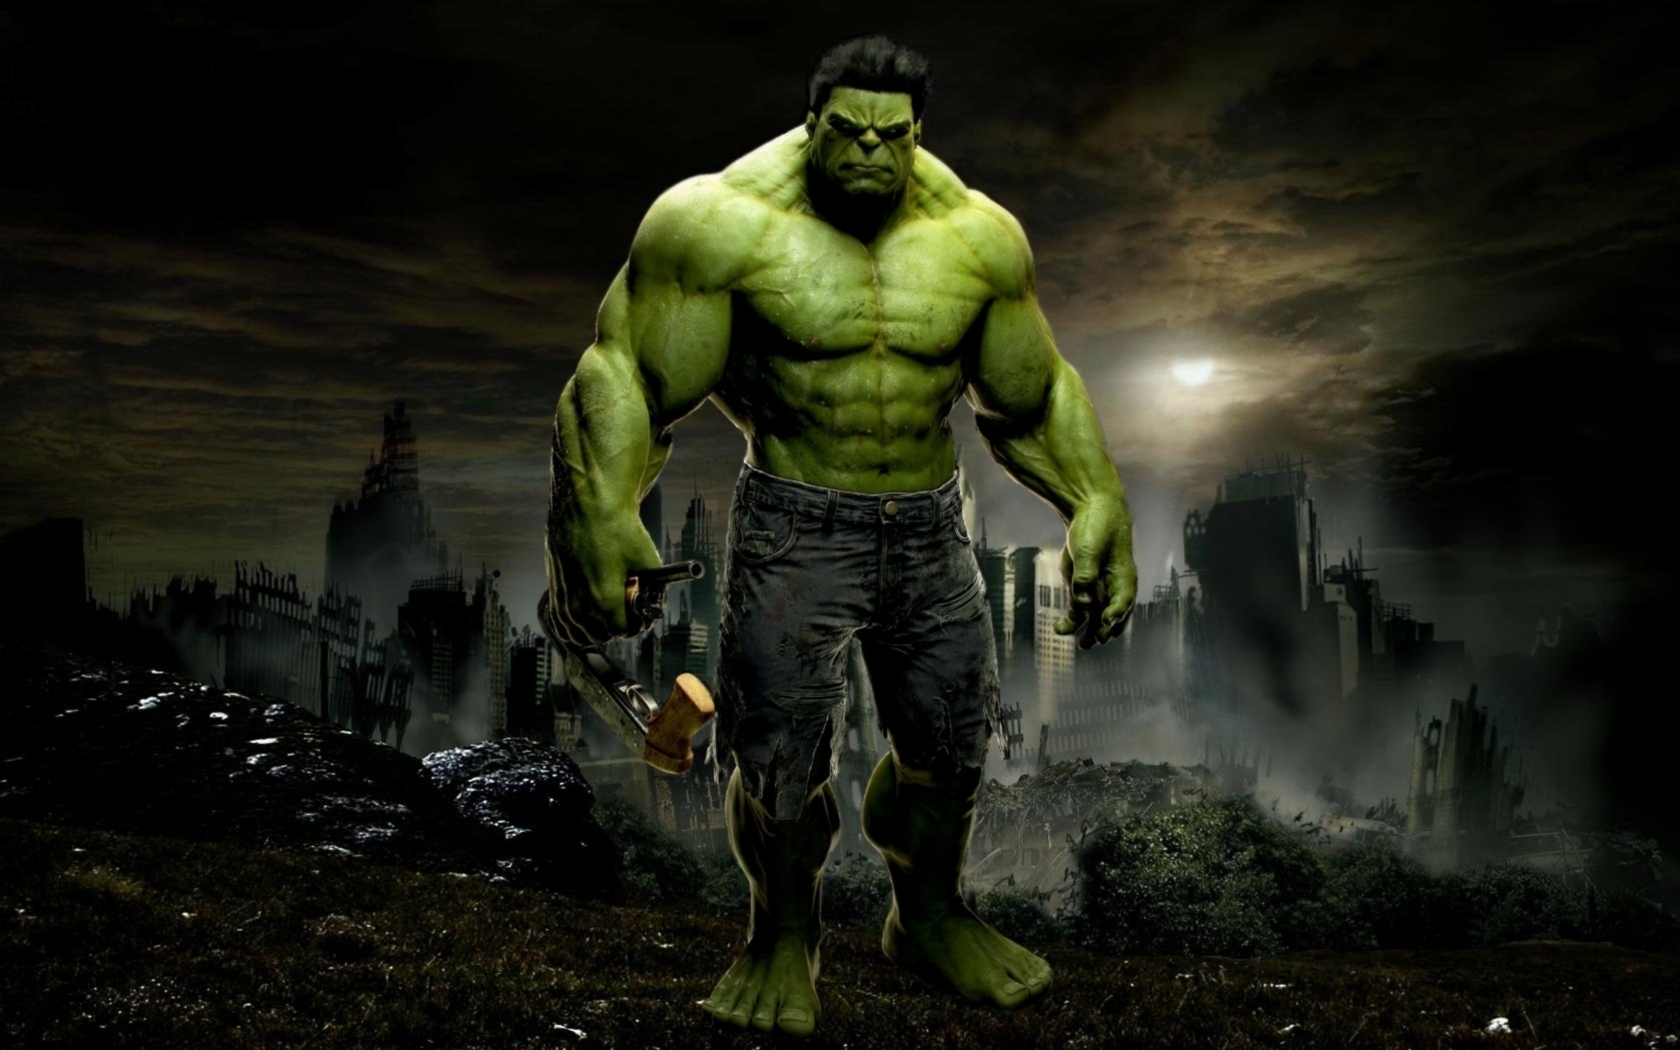 Free download Download Awesome Marvel Hulk Wallpaper 1680x1050 ...